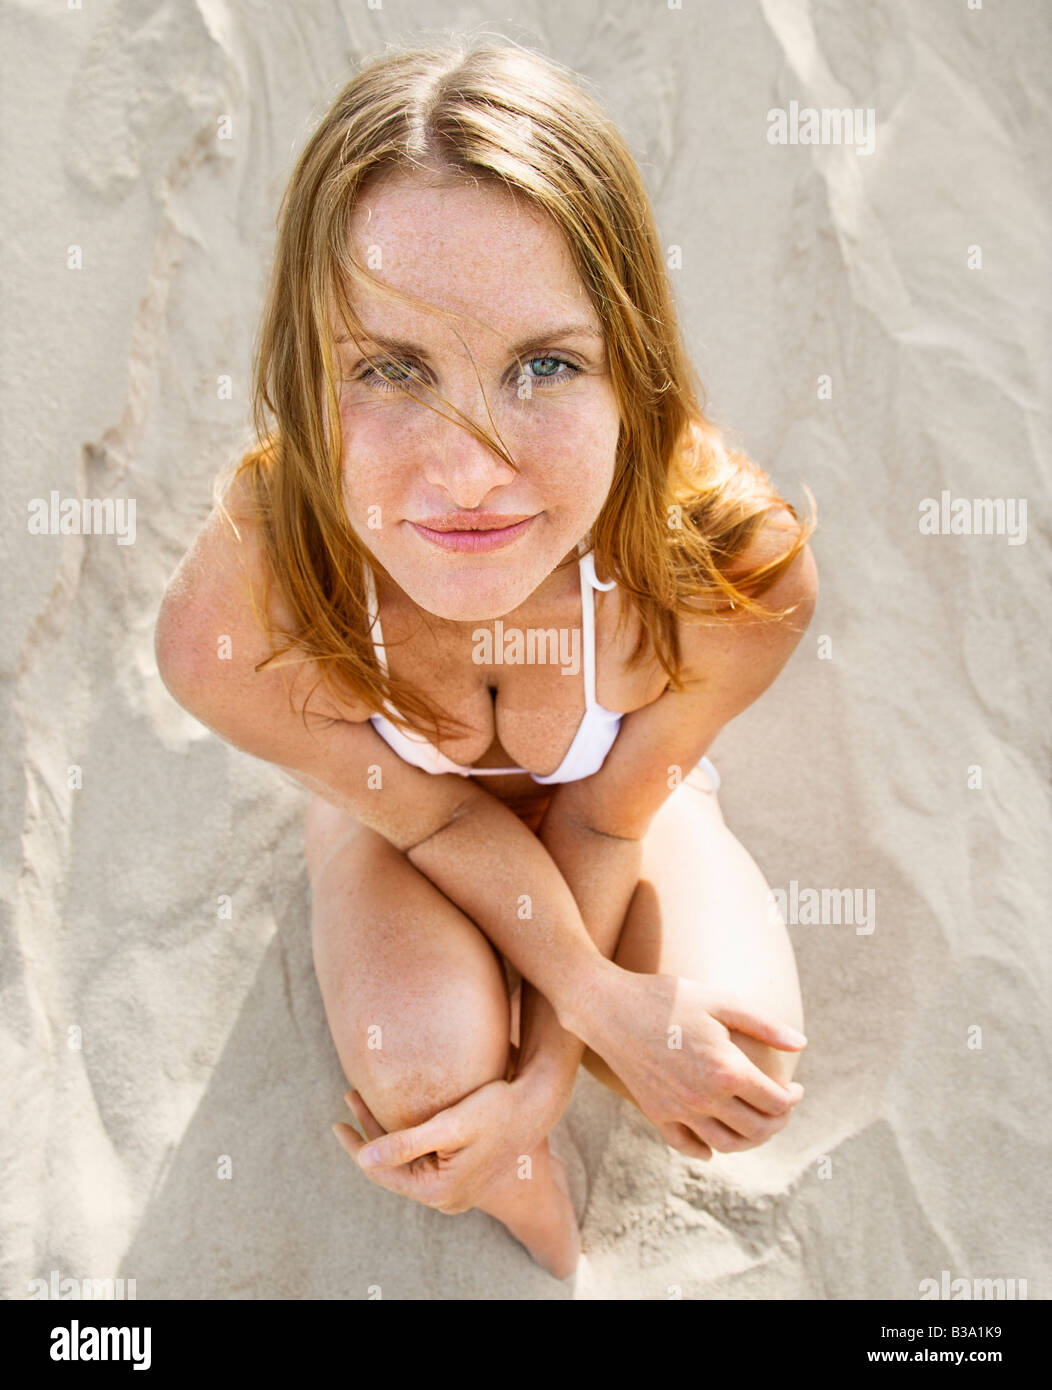 High angle view of redheaded woman sitting on beach wearing bikini looking at viewer Stock Photo